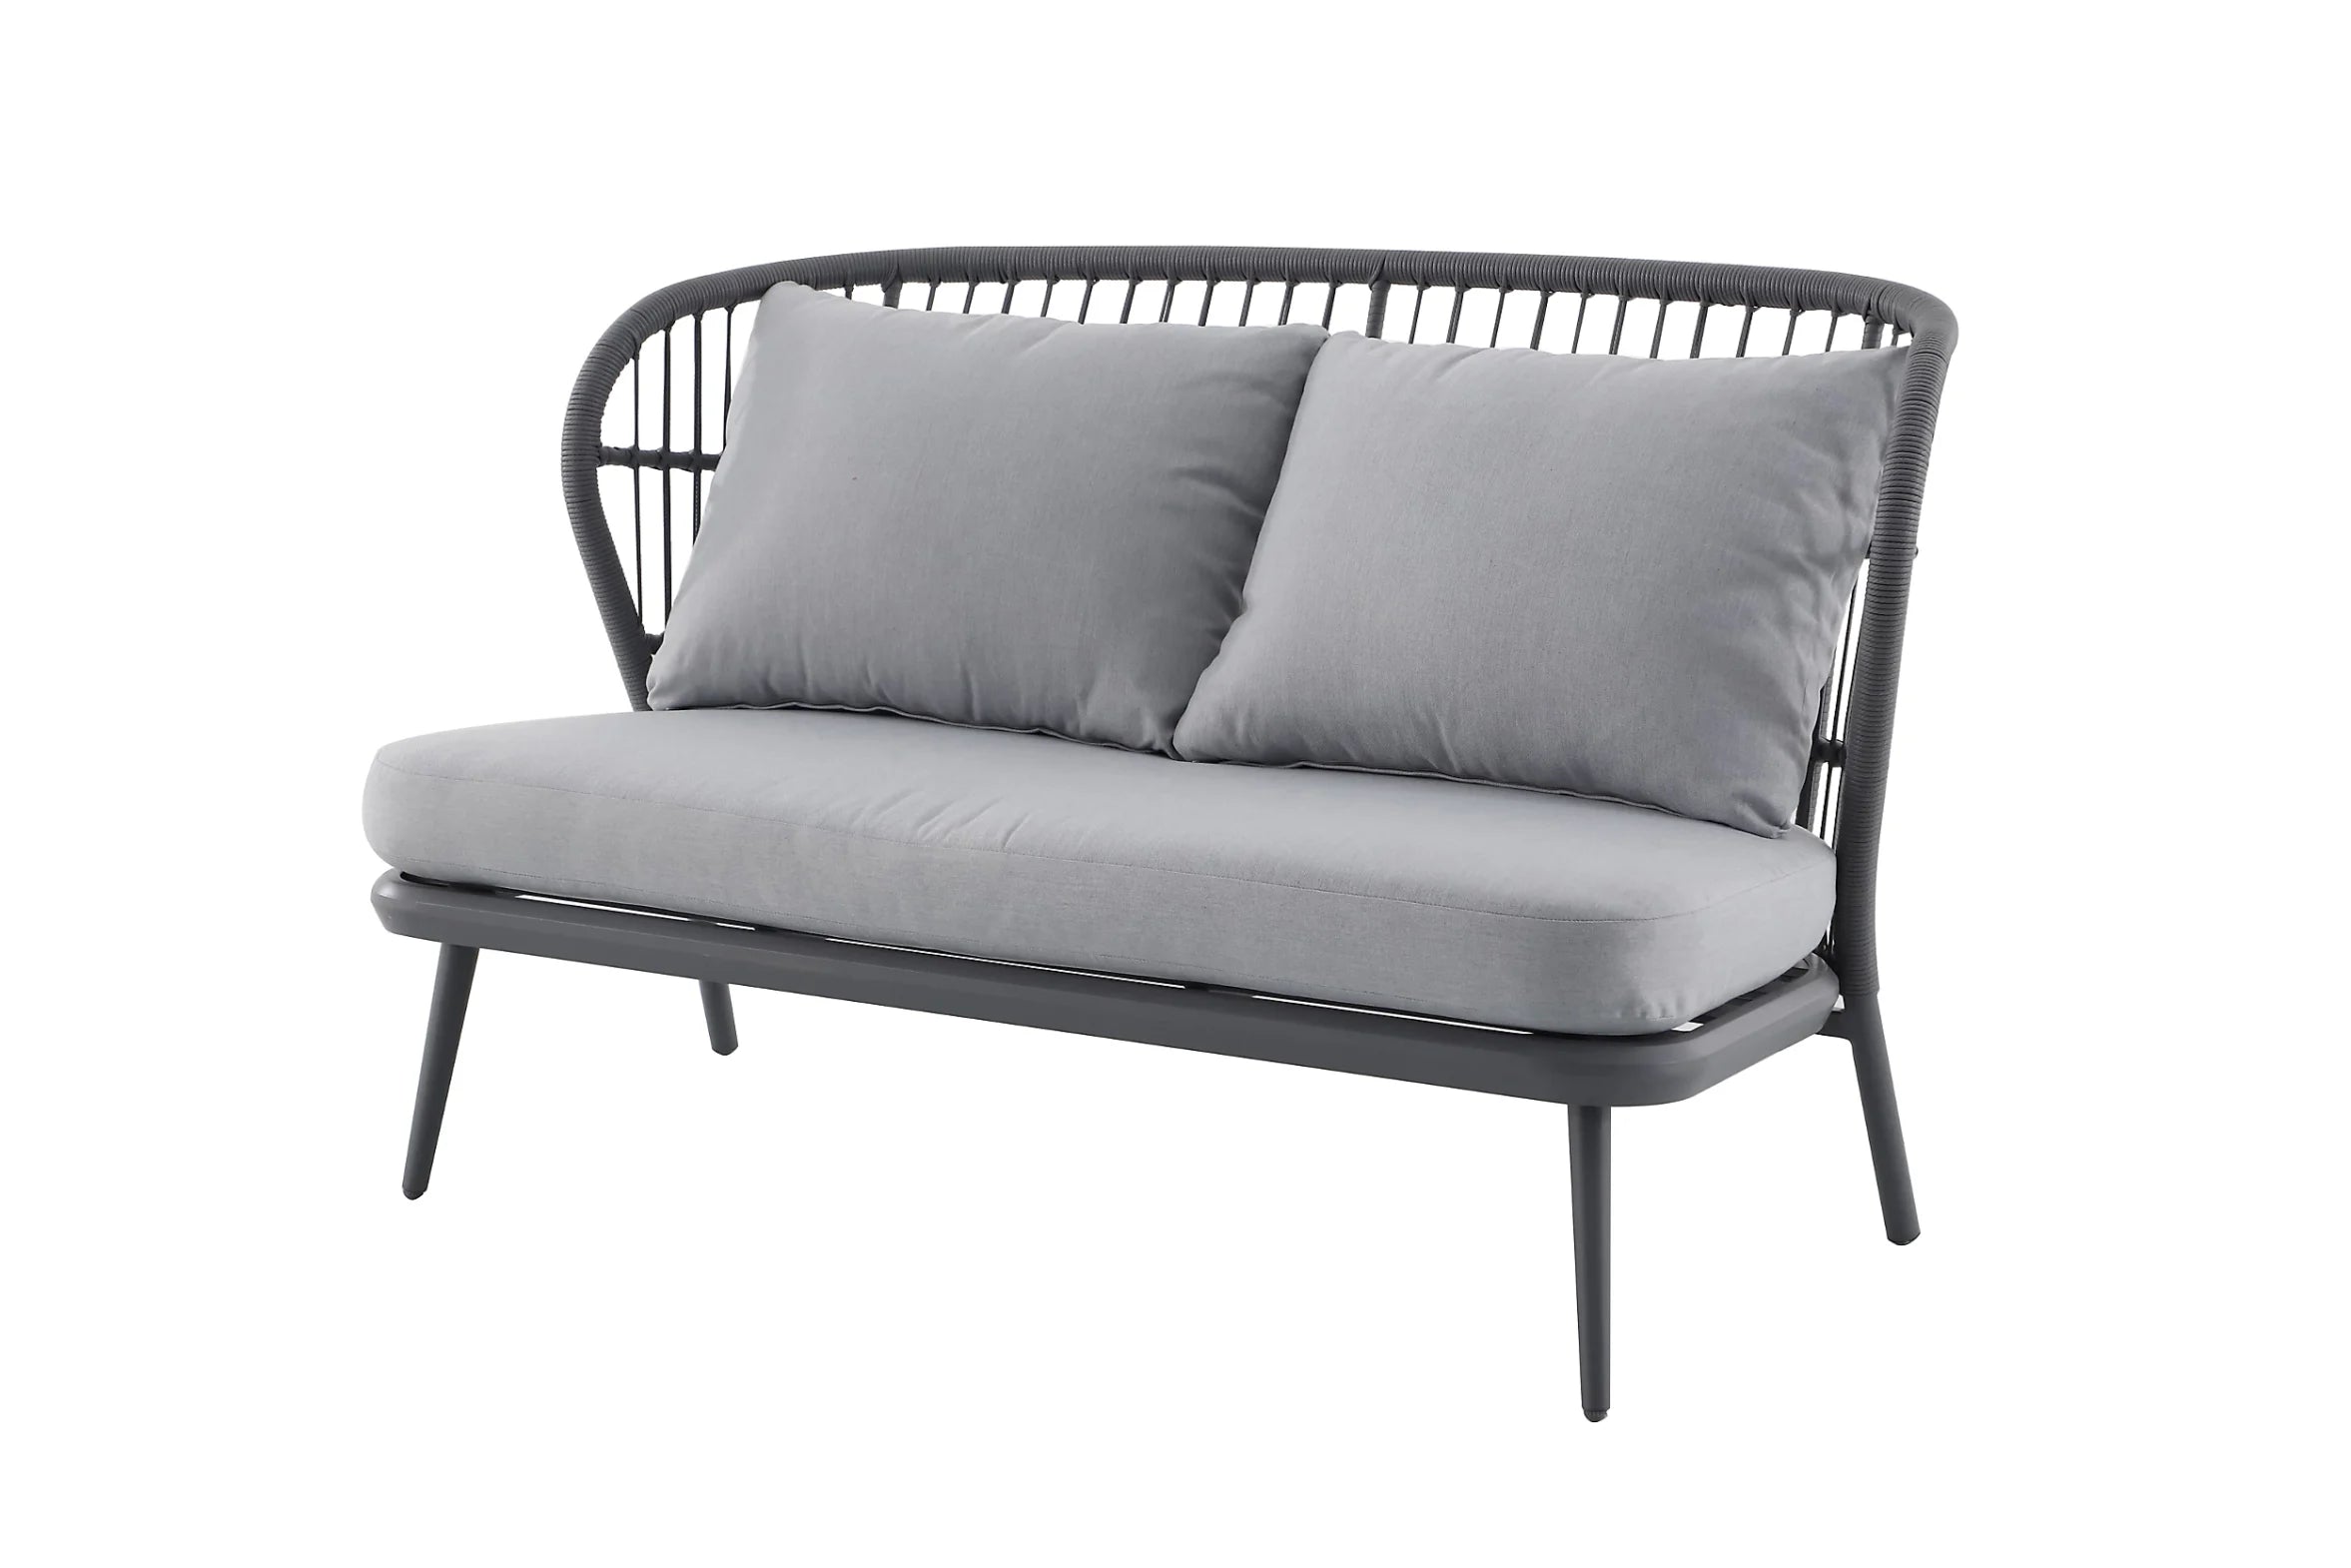 GoodHome Apolima Grey Aluminium 4 Seater Coffee set, Garden furniture set - Rattan Garden Furniture 2345